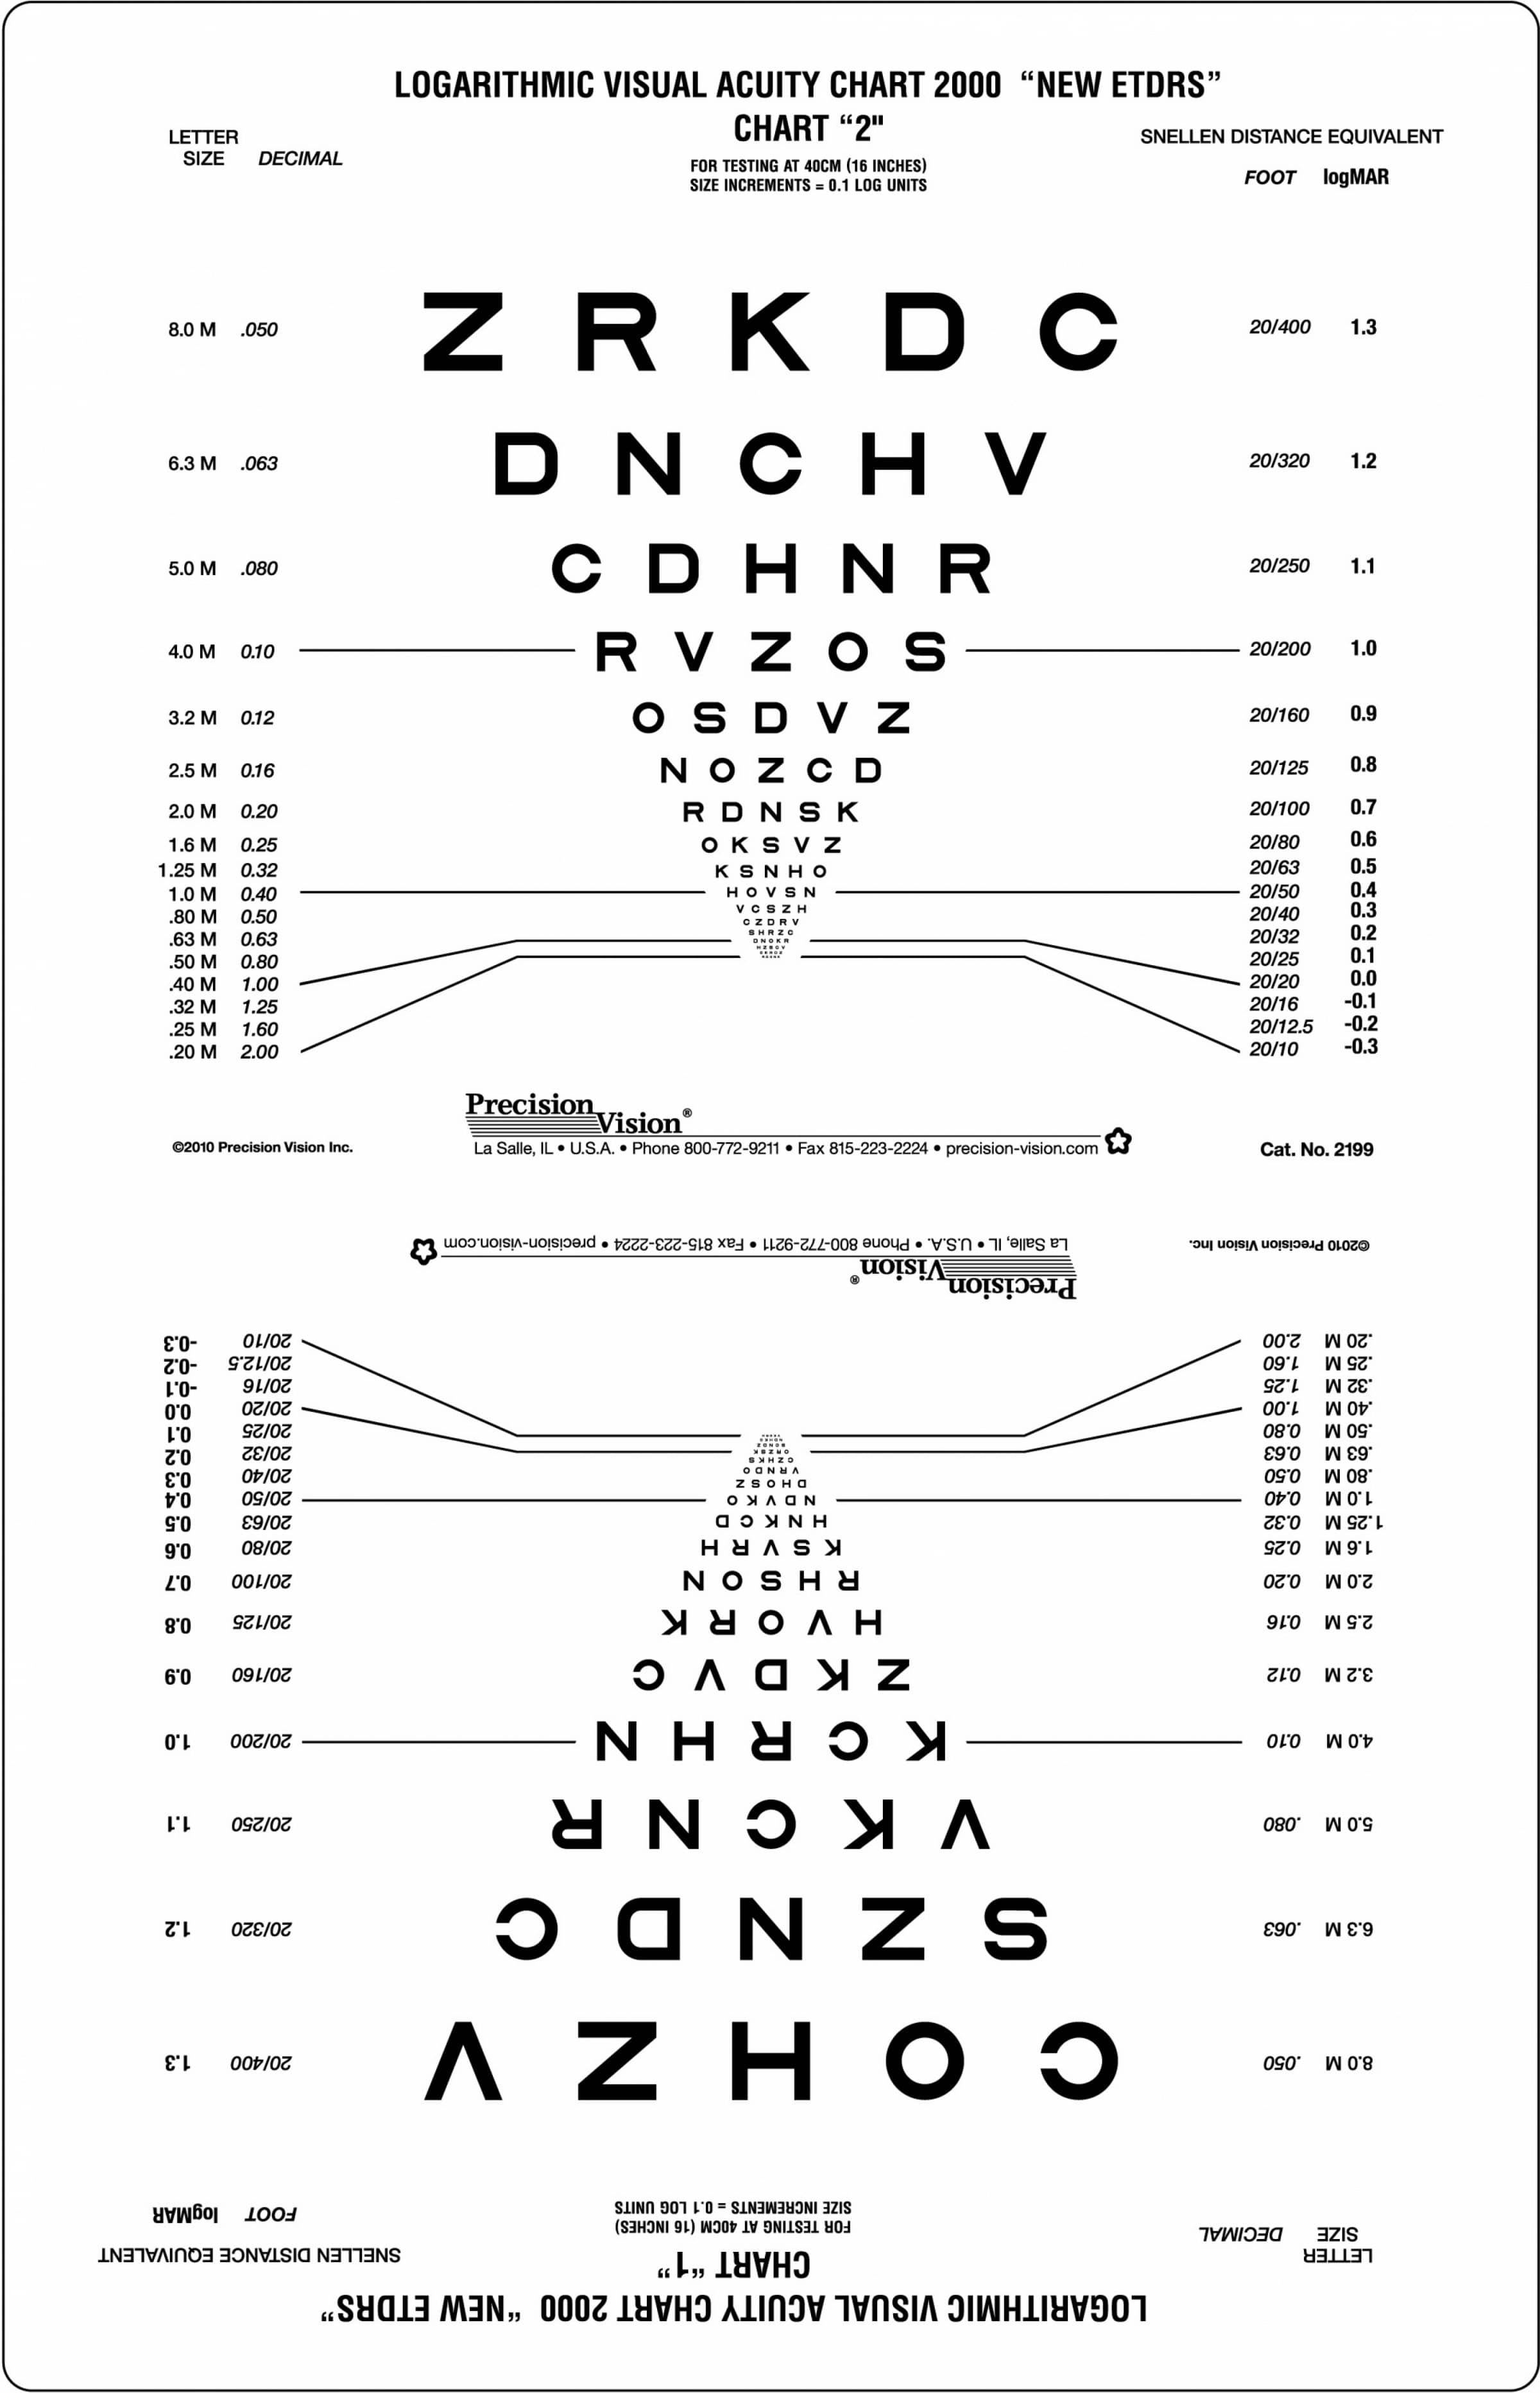 Near Point Acuity Illuminated Flip Chart - Precision Vision